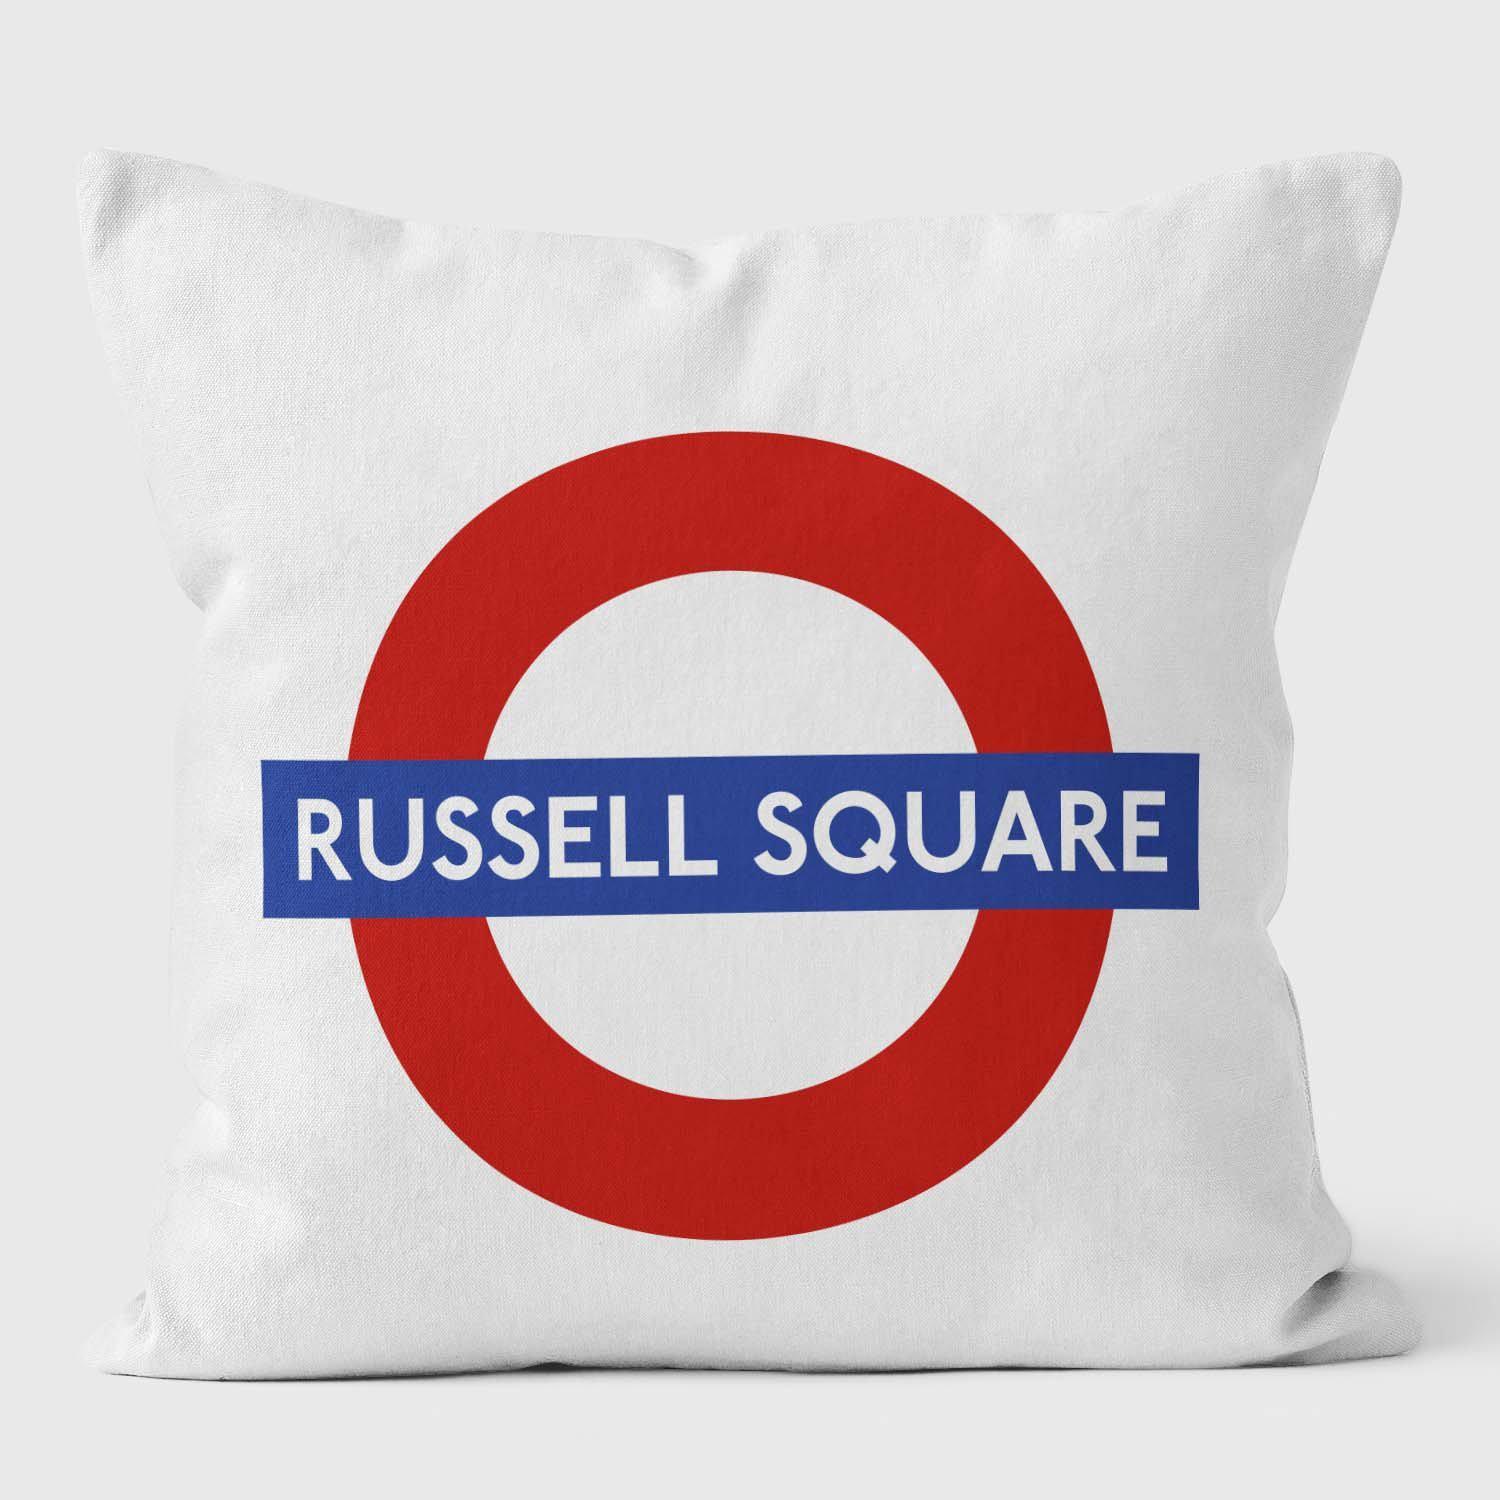 Russell Square London Underground Tube Station Roundel Cushion - Handmade Cushions UK - WeLoveCushions